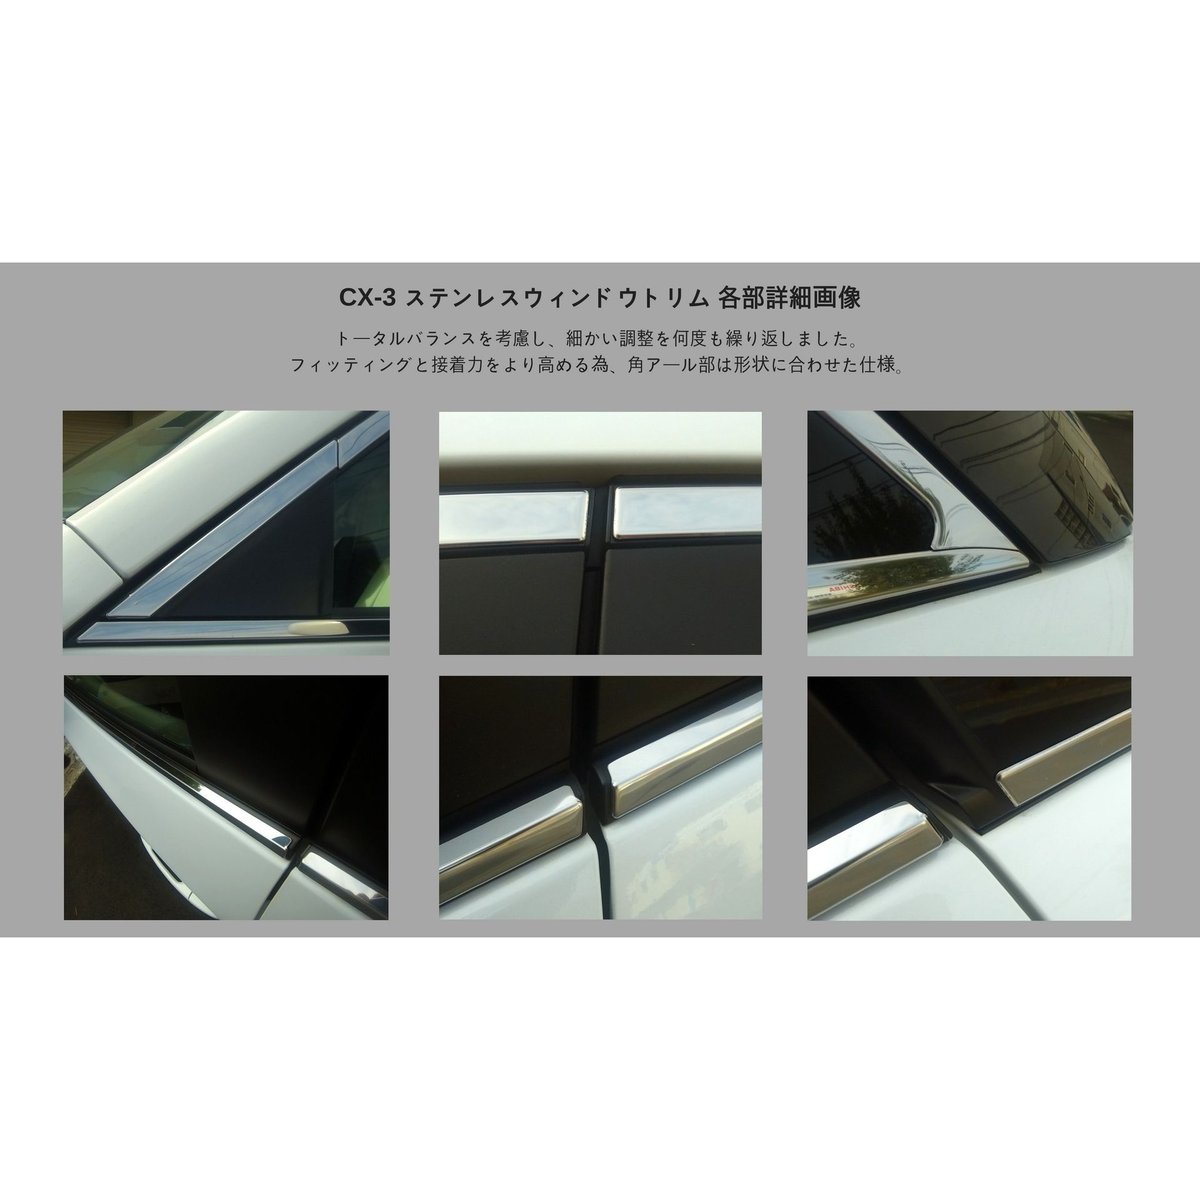 Stainless Window Trim for MAZDA CX-3